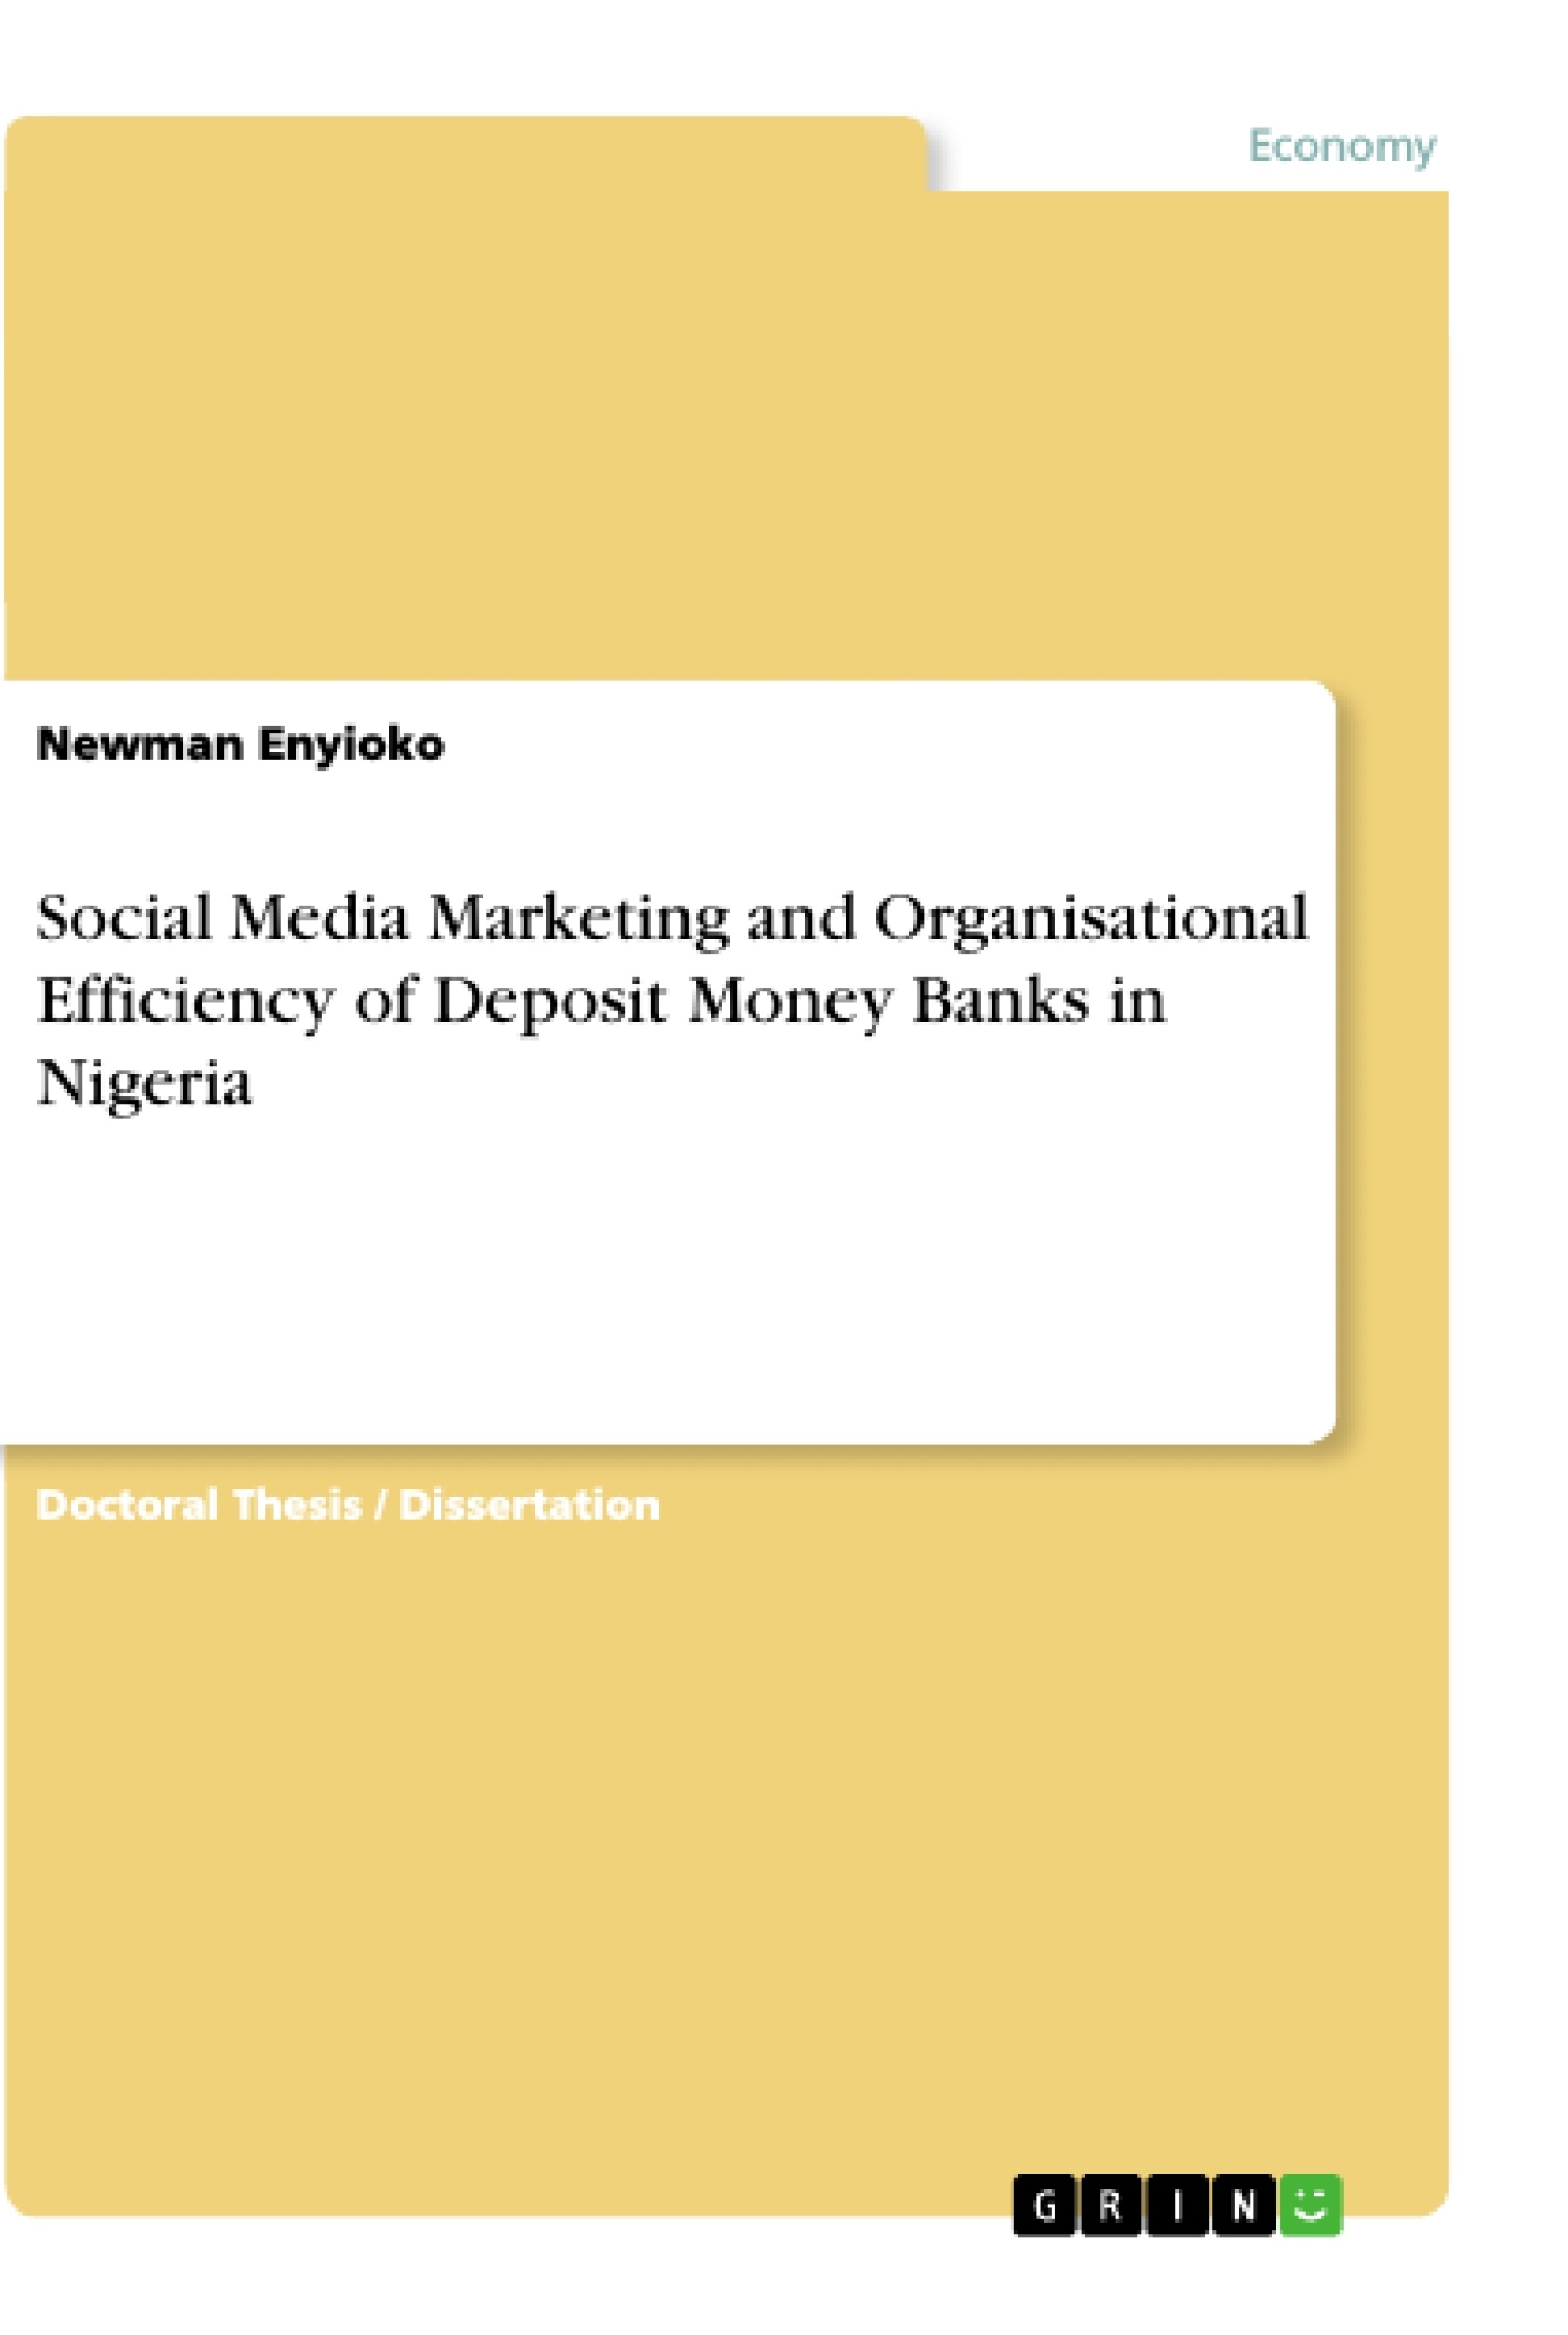 Title: Social Media Marketing and Organisational Efficiency of Deposit Money Banks in Nigeria